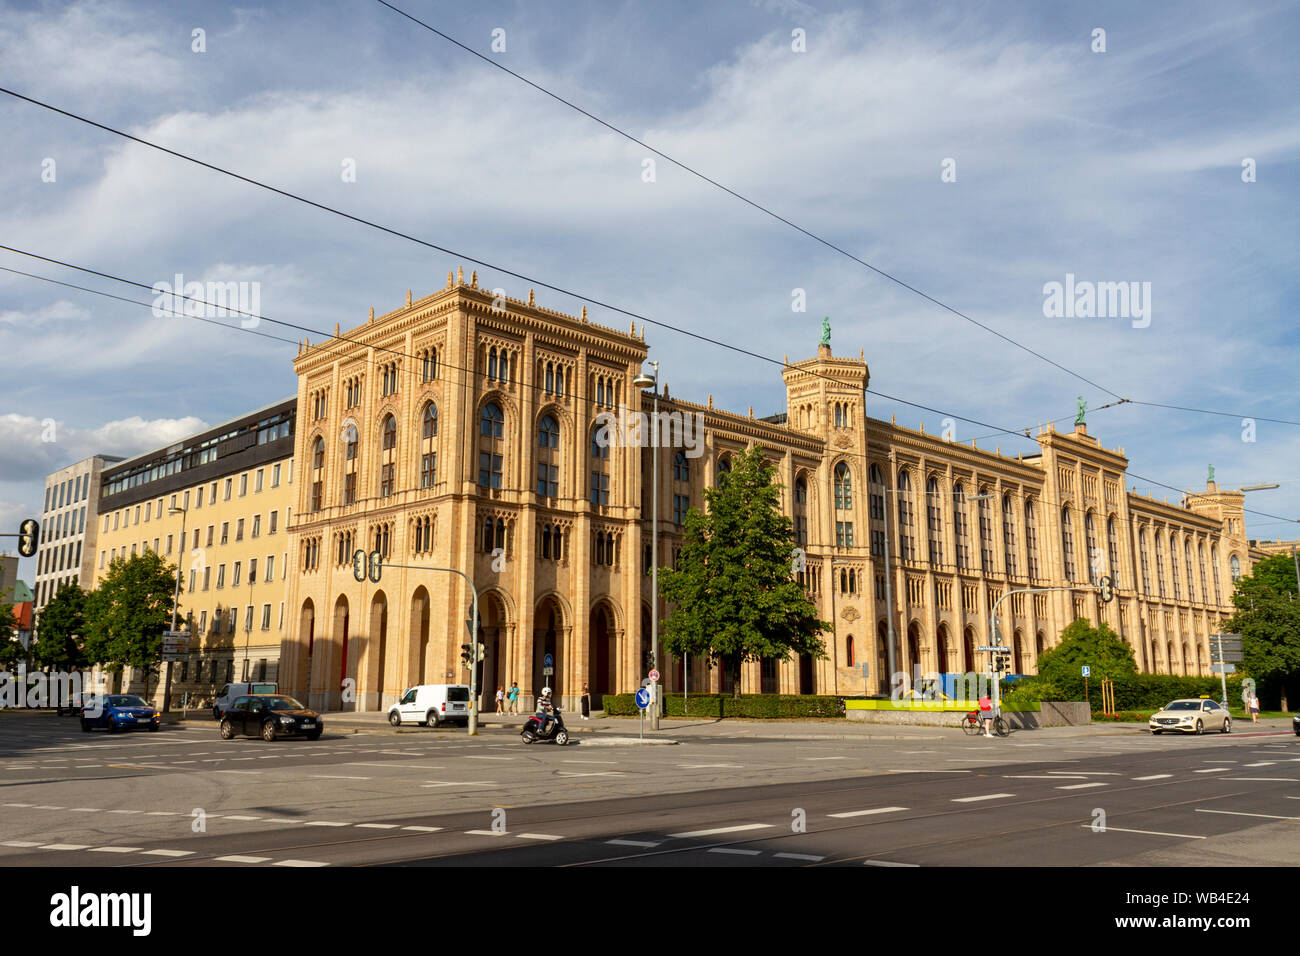 Ornate Government offices, Regierung von Oberbayern on Maximilianstraße, Munich, Bavaria, Germany. Stock Photo